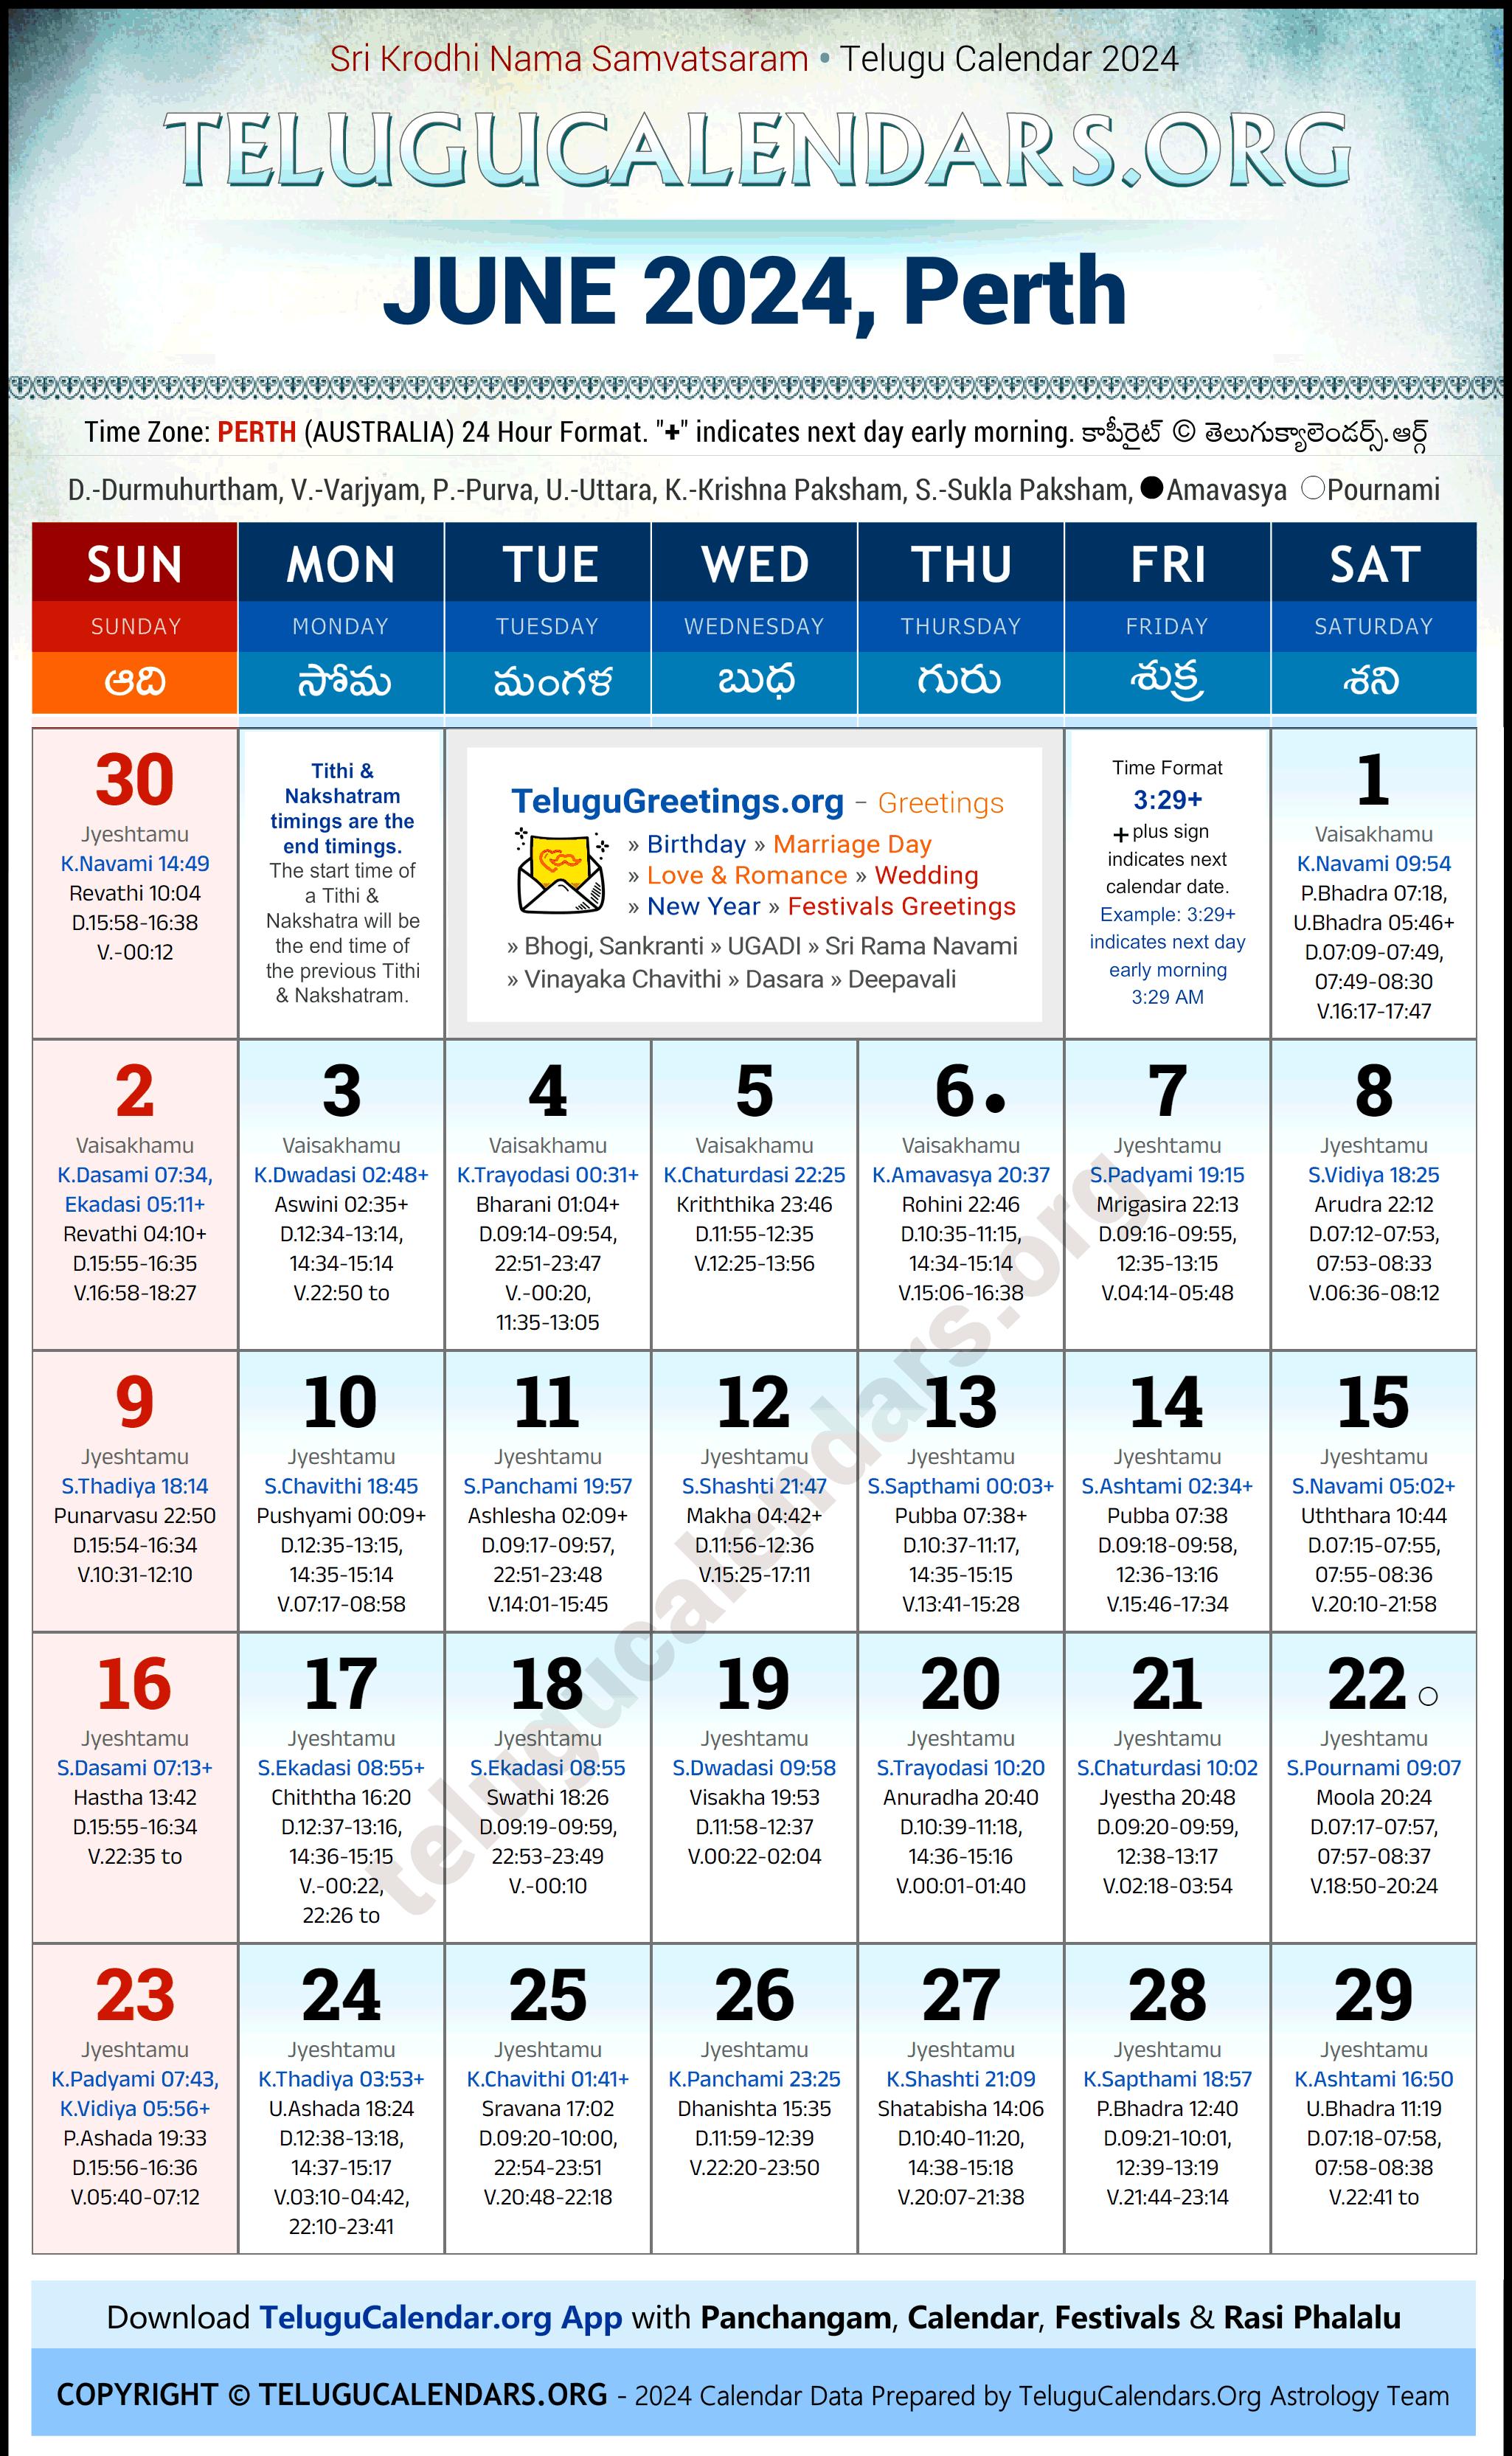 Telugu Calendar 2024 June Festivals for Perth